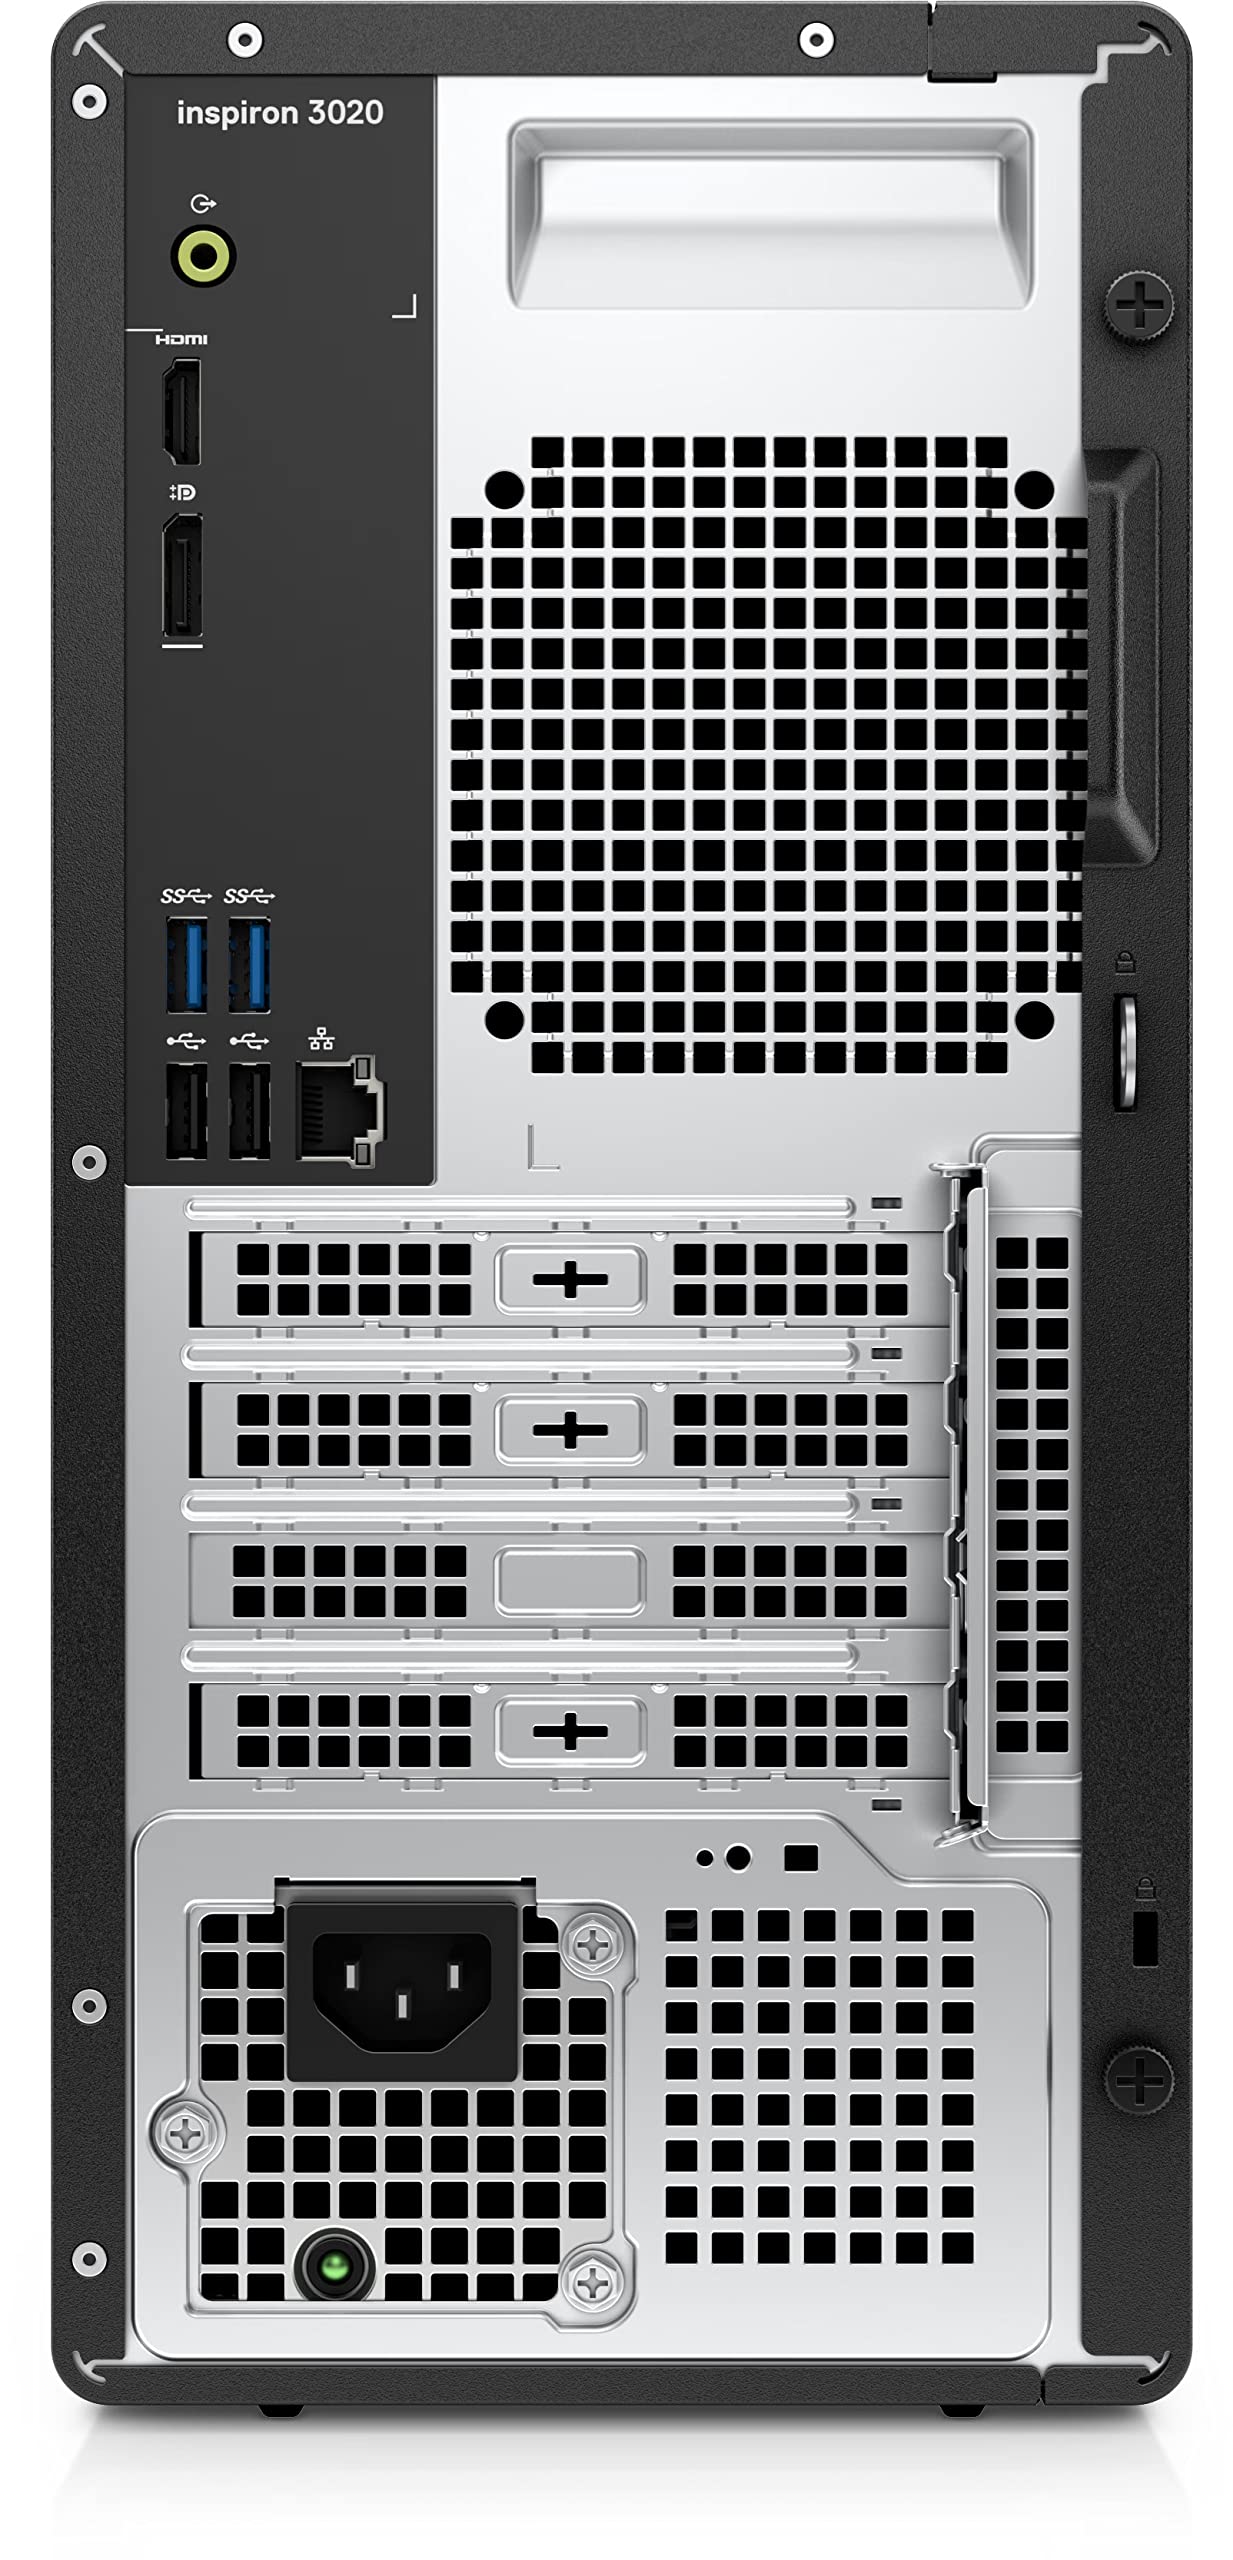 Dell Inspiron 3020 Tower Desktop Computer - 13th Gen Intel Core i5-13400 10-Core up to 4.60 GHz Processor, 64GB DDR4 RAM, 512GB NVMe SSD, Intel UHD Graphics 730, DVD+RW, Windows 11 Home